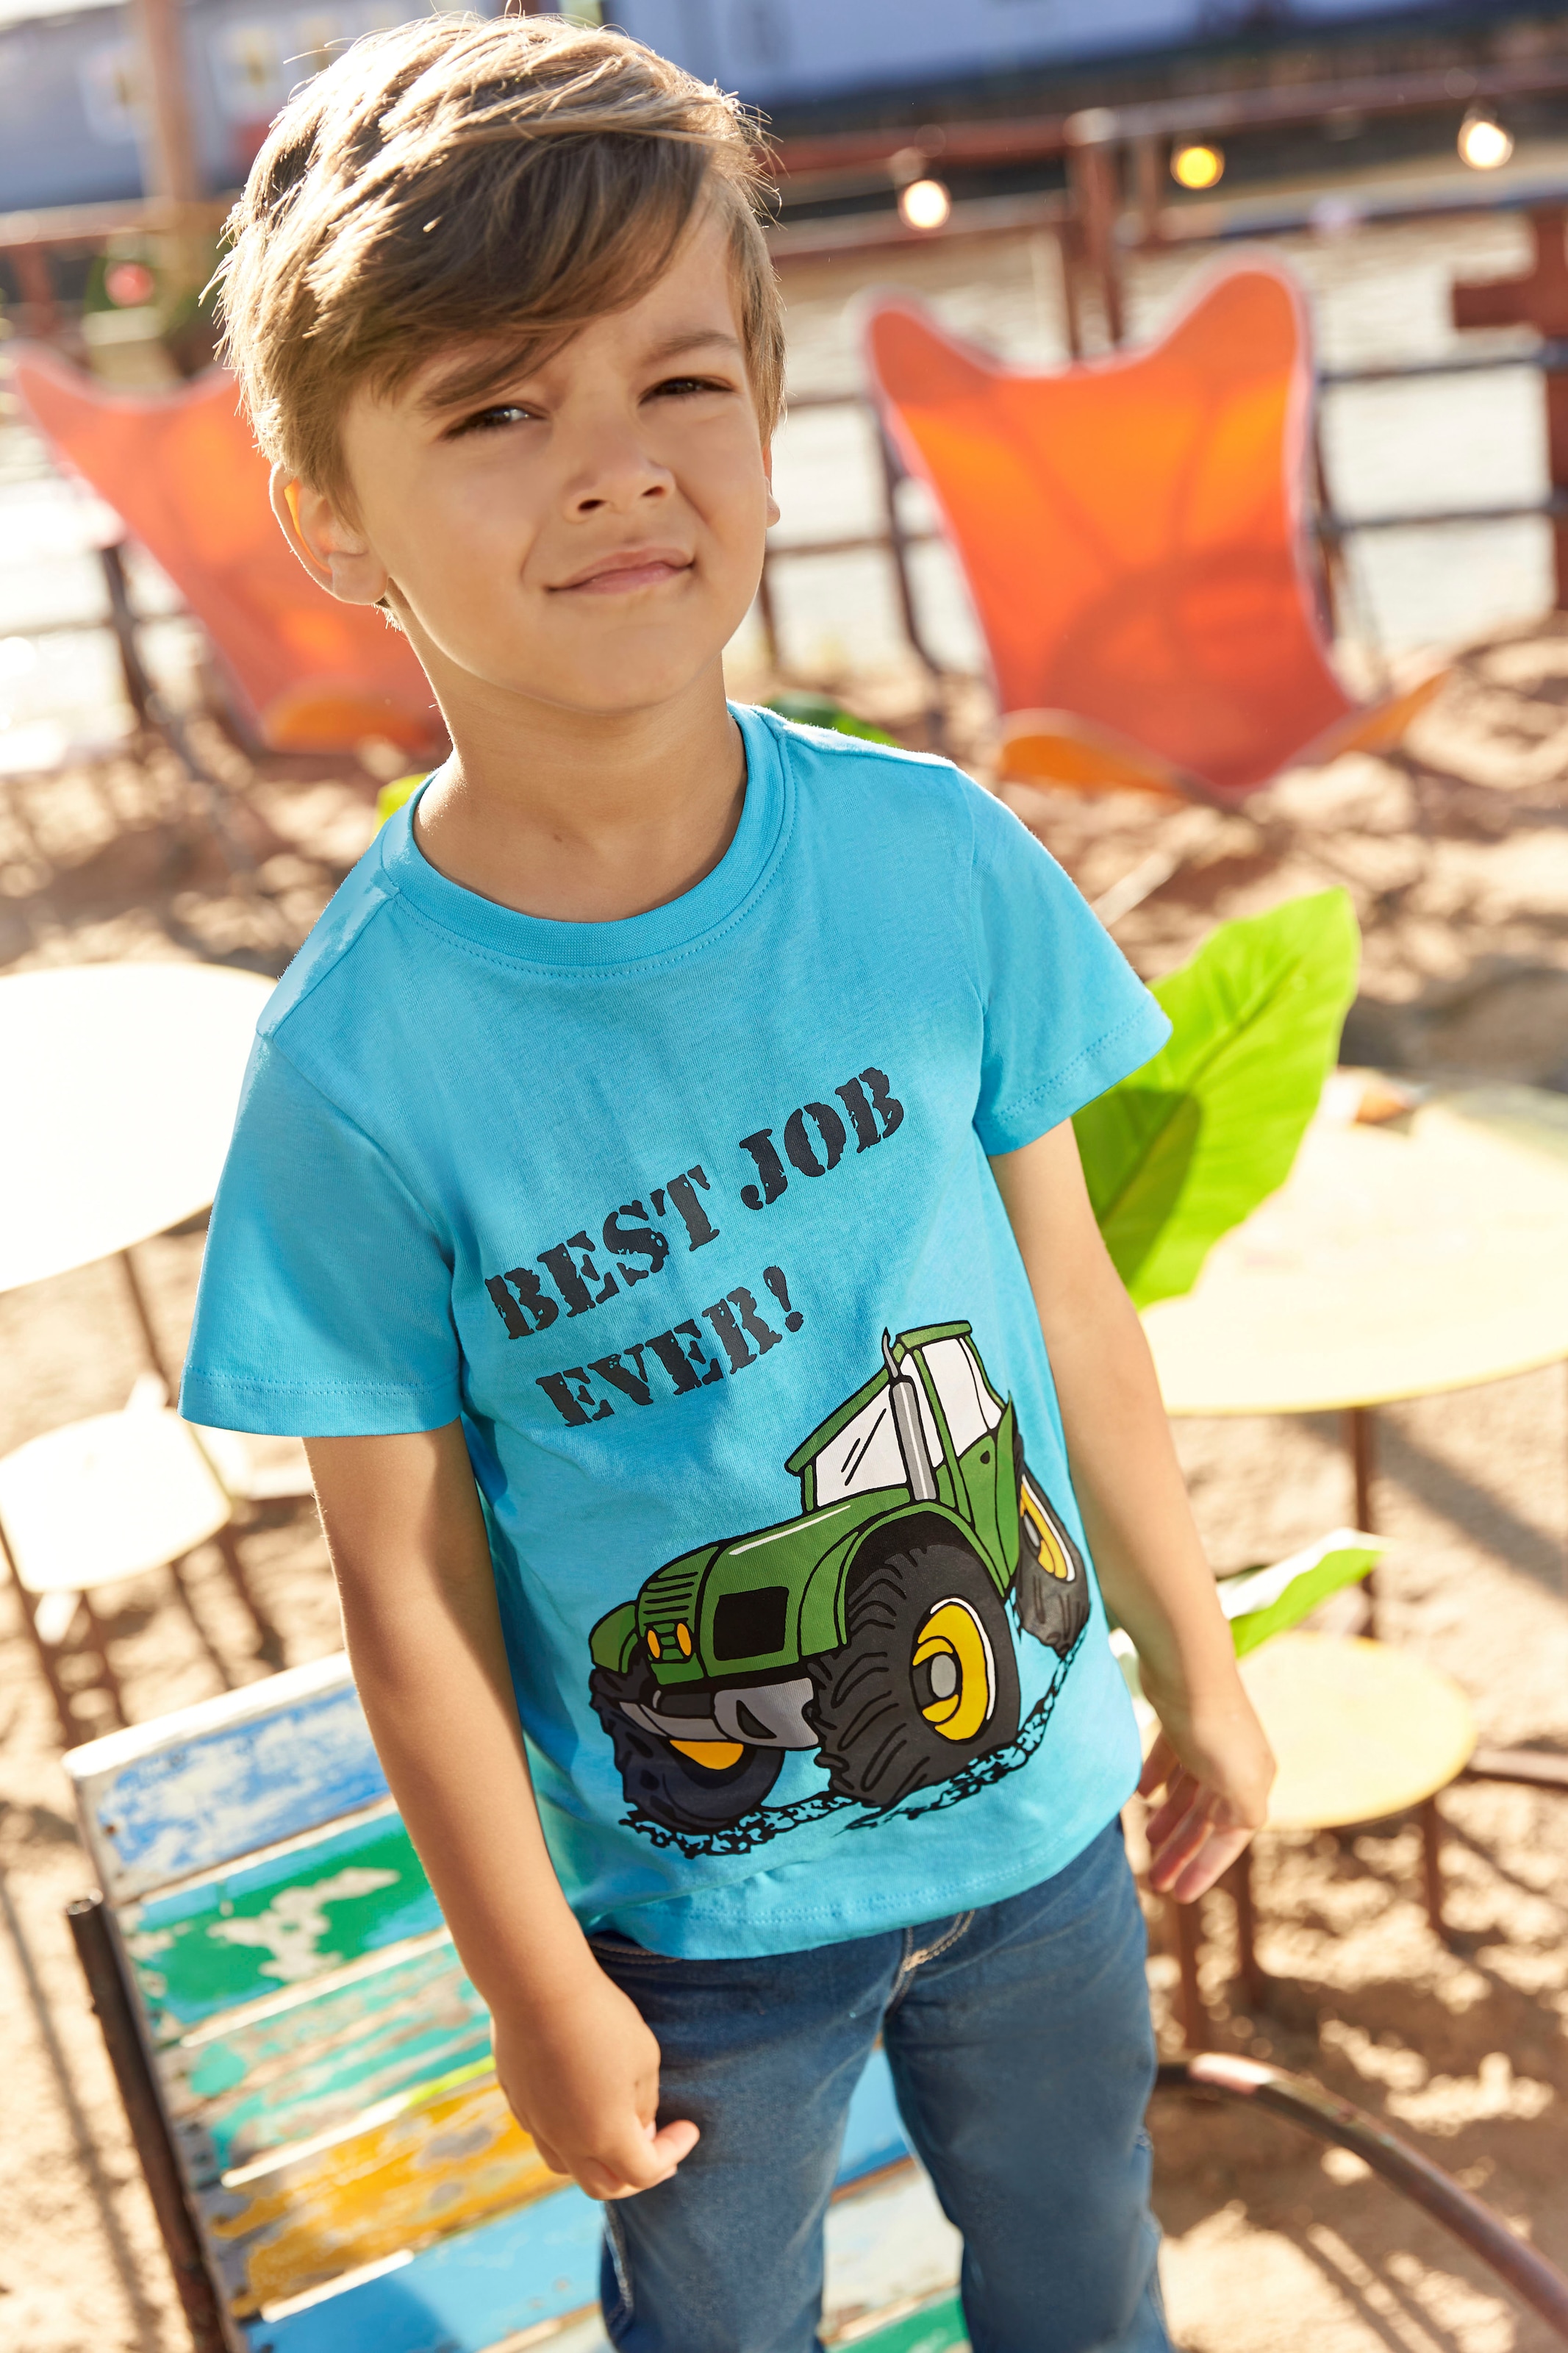 KIDSWORLD EVER!«, JOB BAUR 2er-Pack) | T-Shirt bestellen (Packung, »BEST